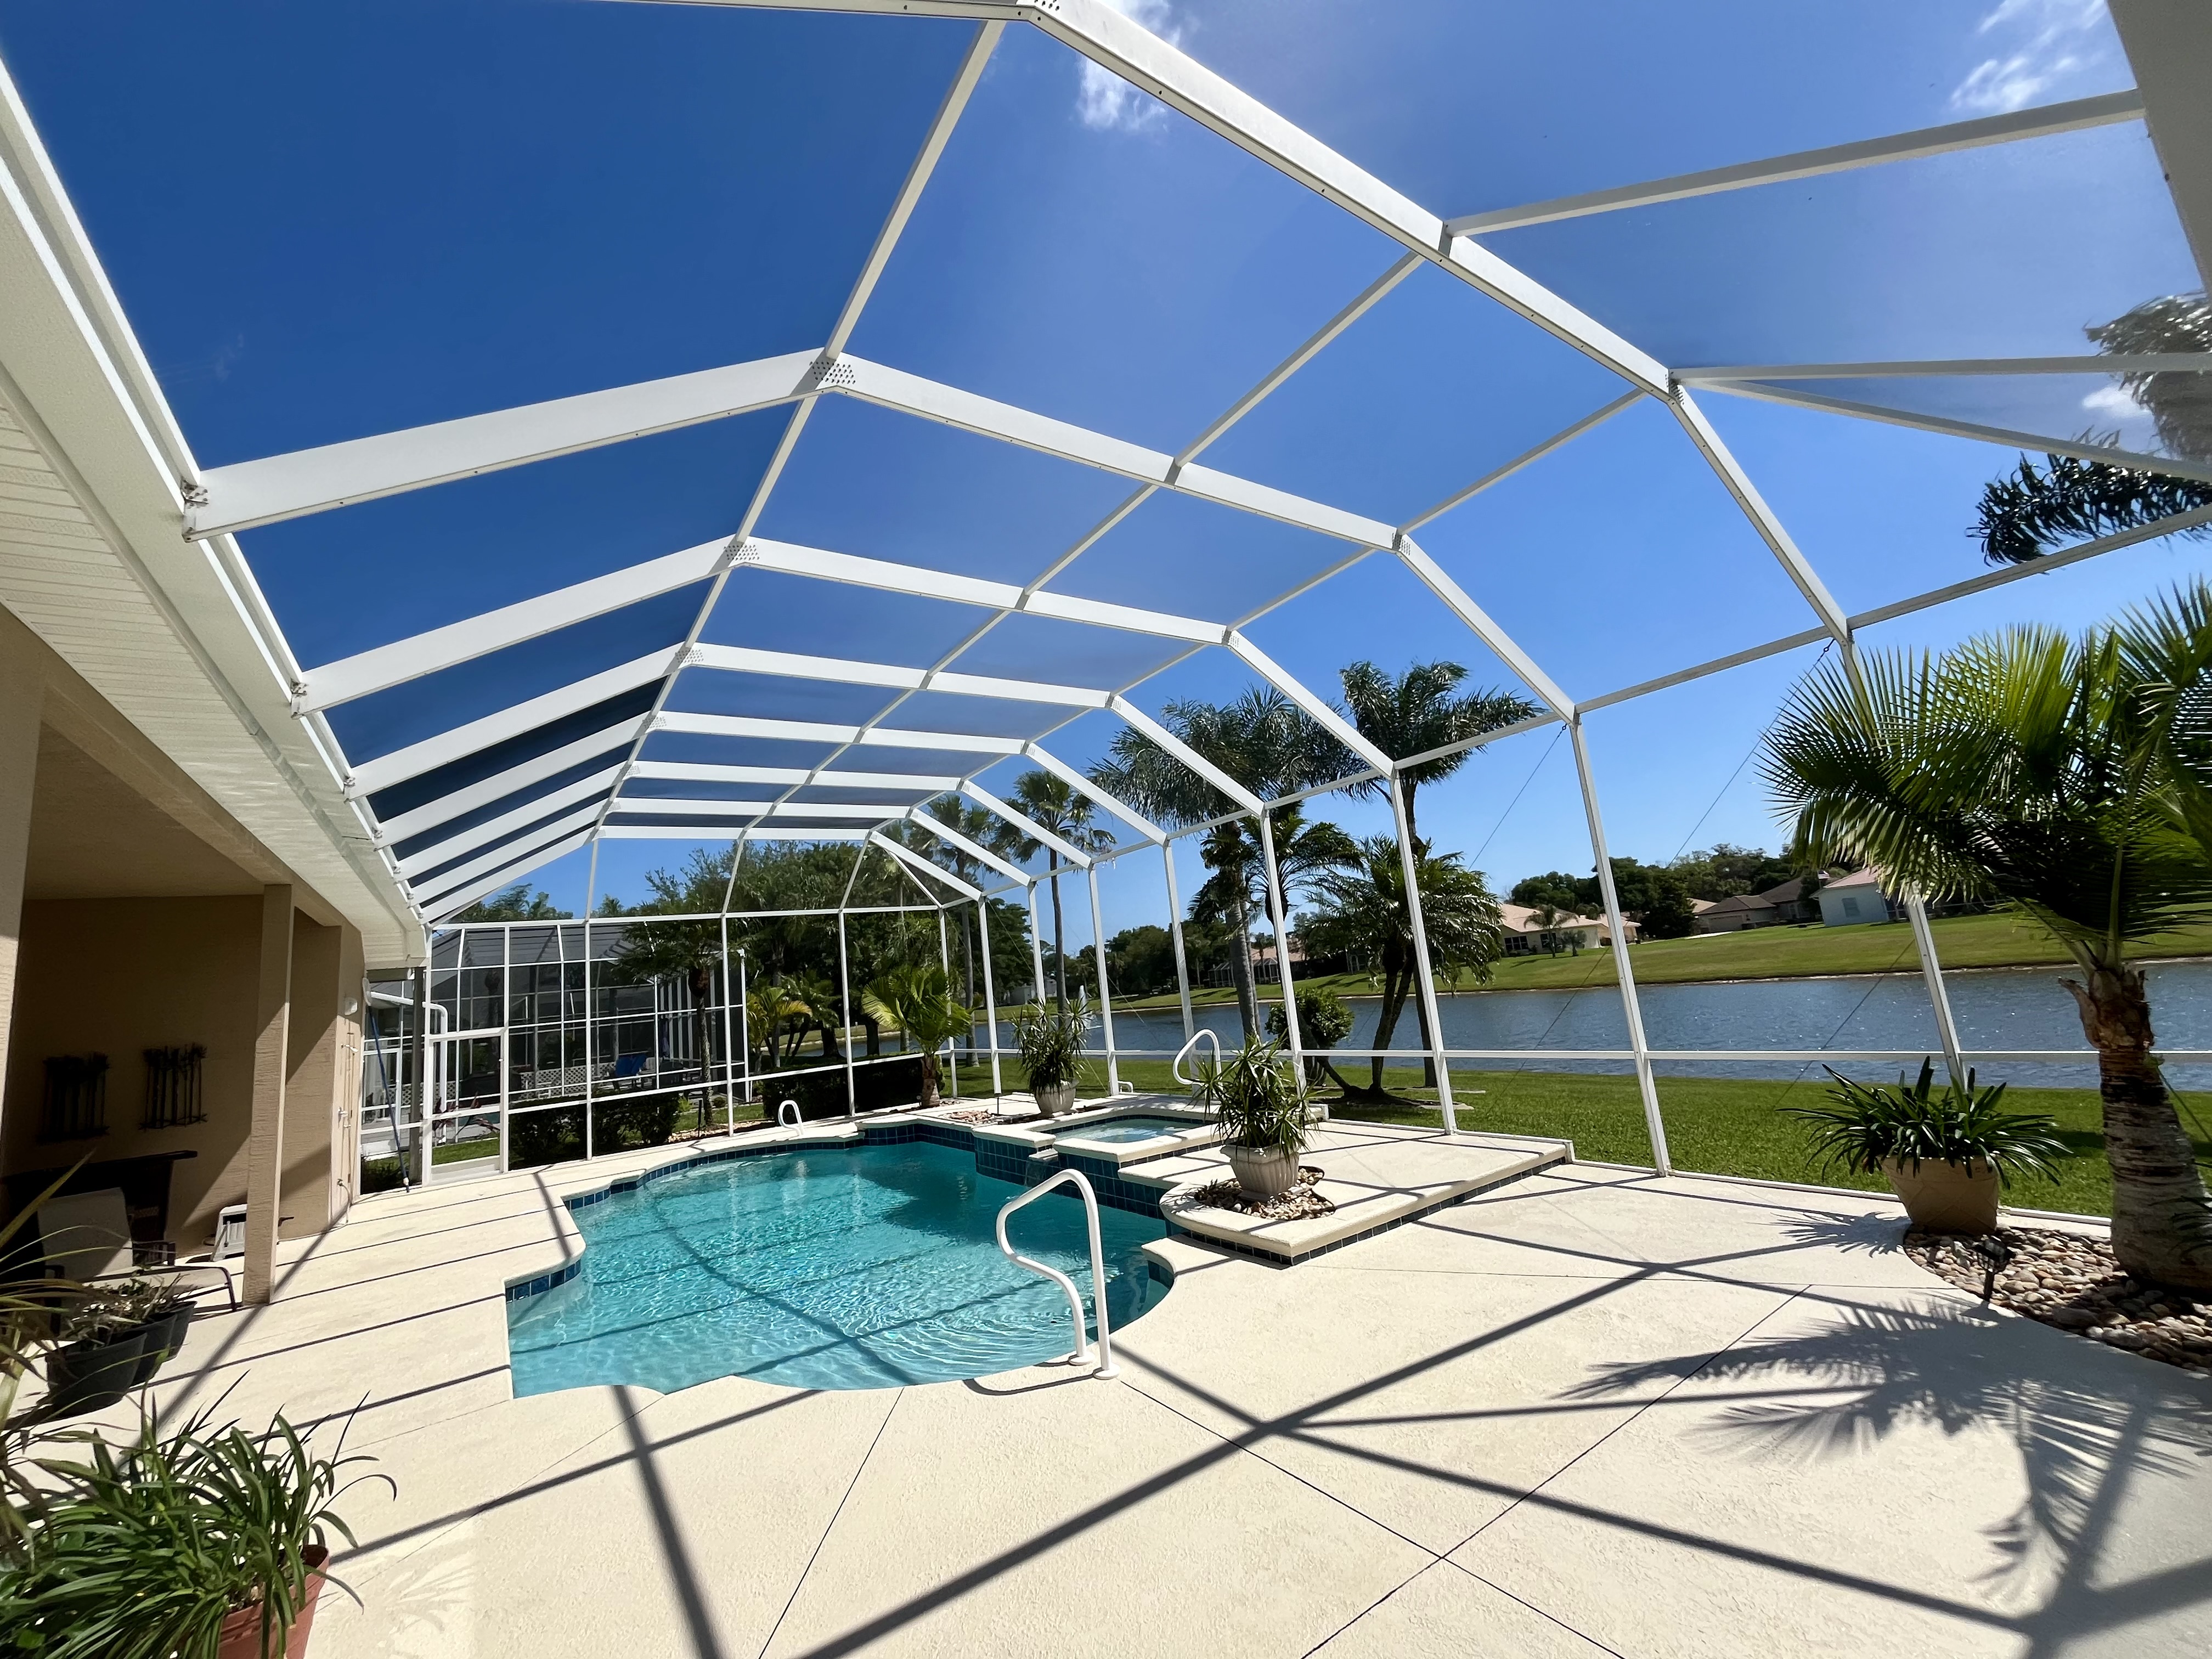 Pool Enclosure Cleaning In The Sanctuary Neighborhood In Port Orange, Florida